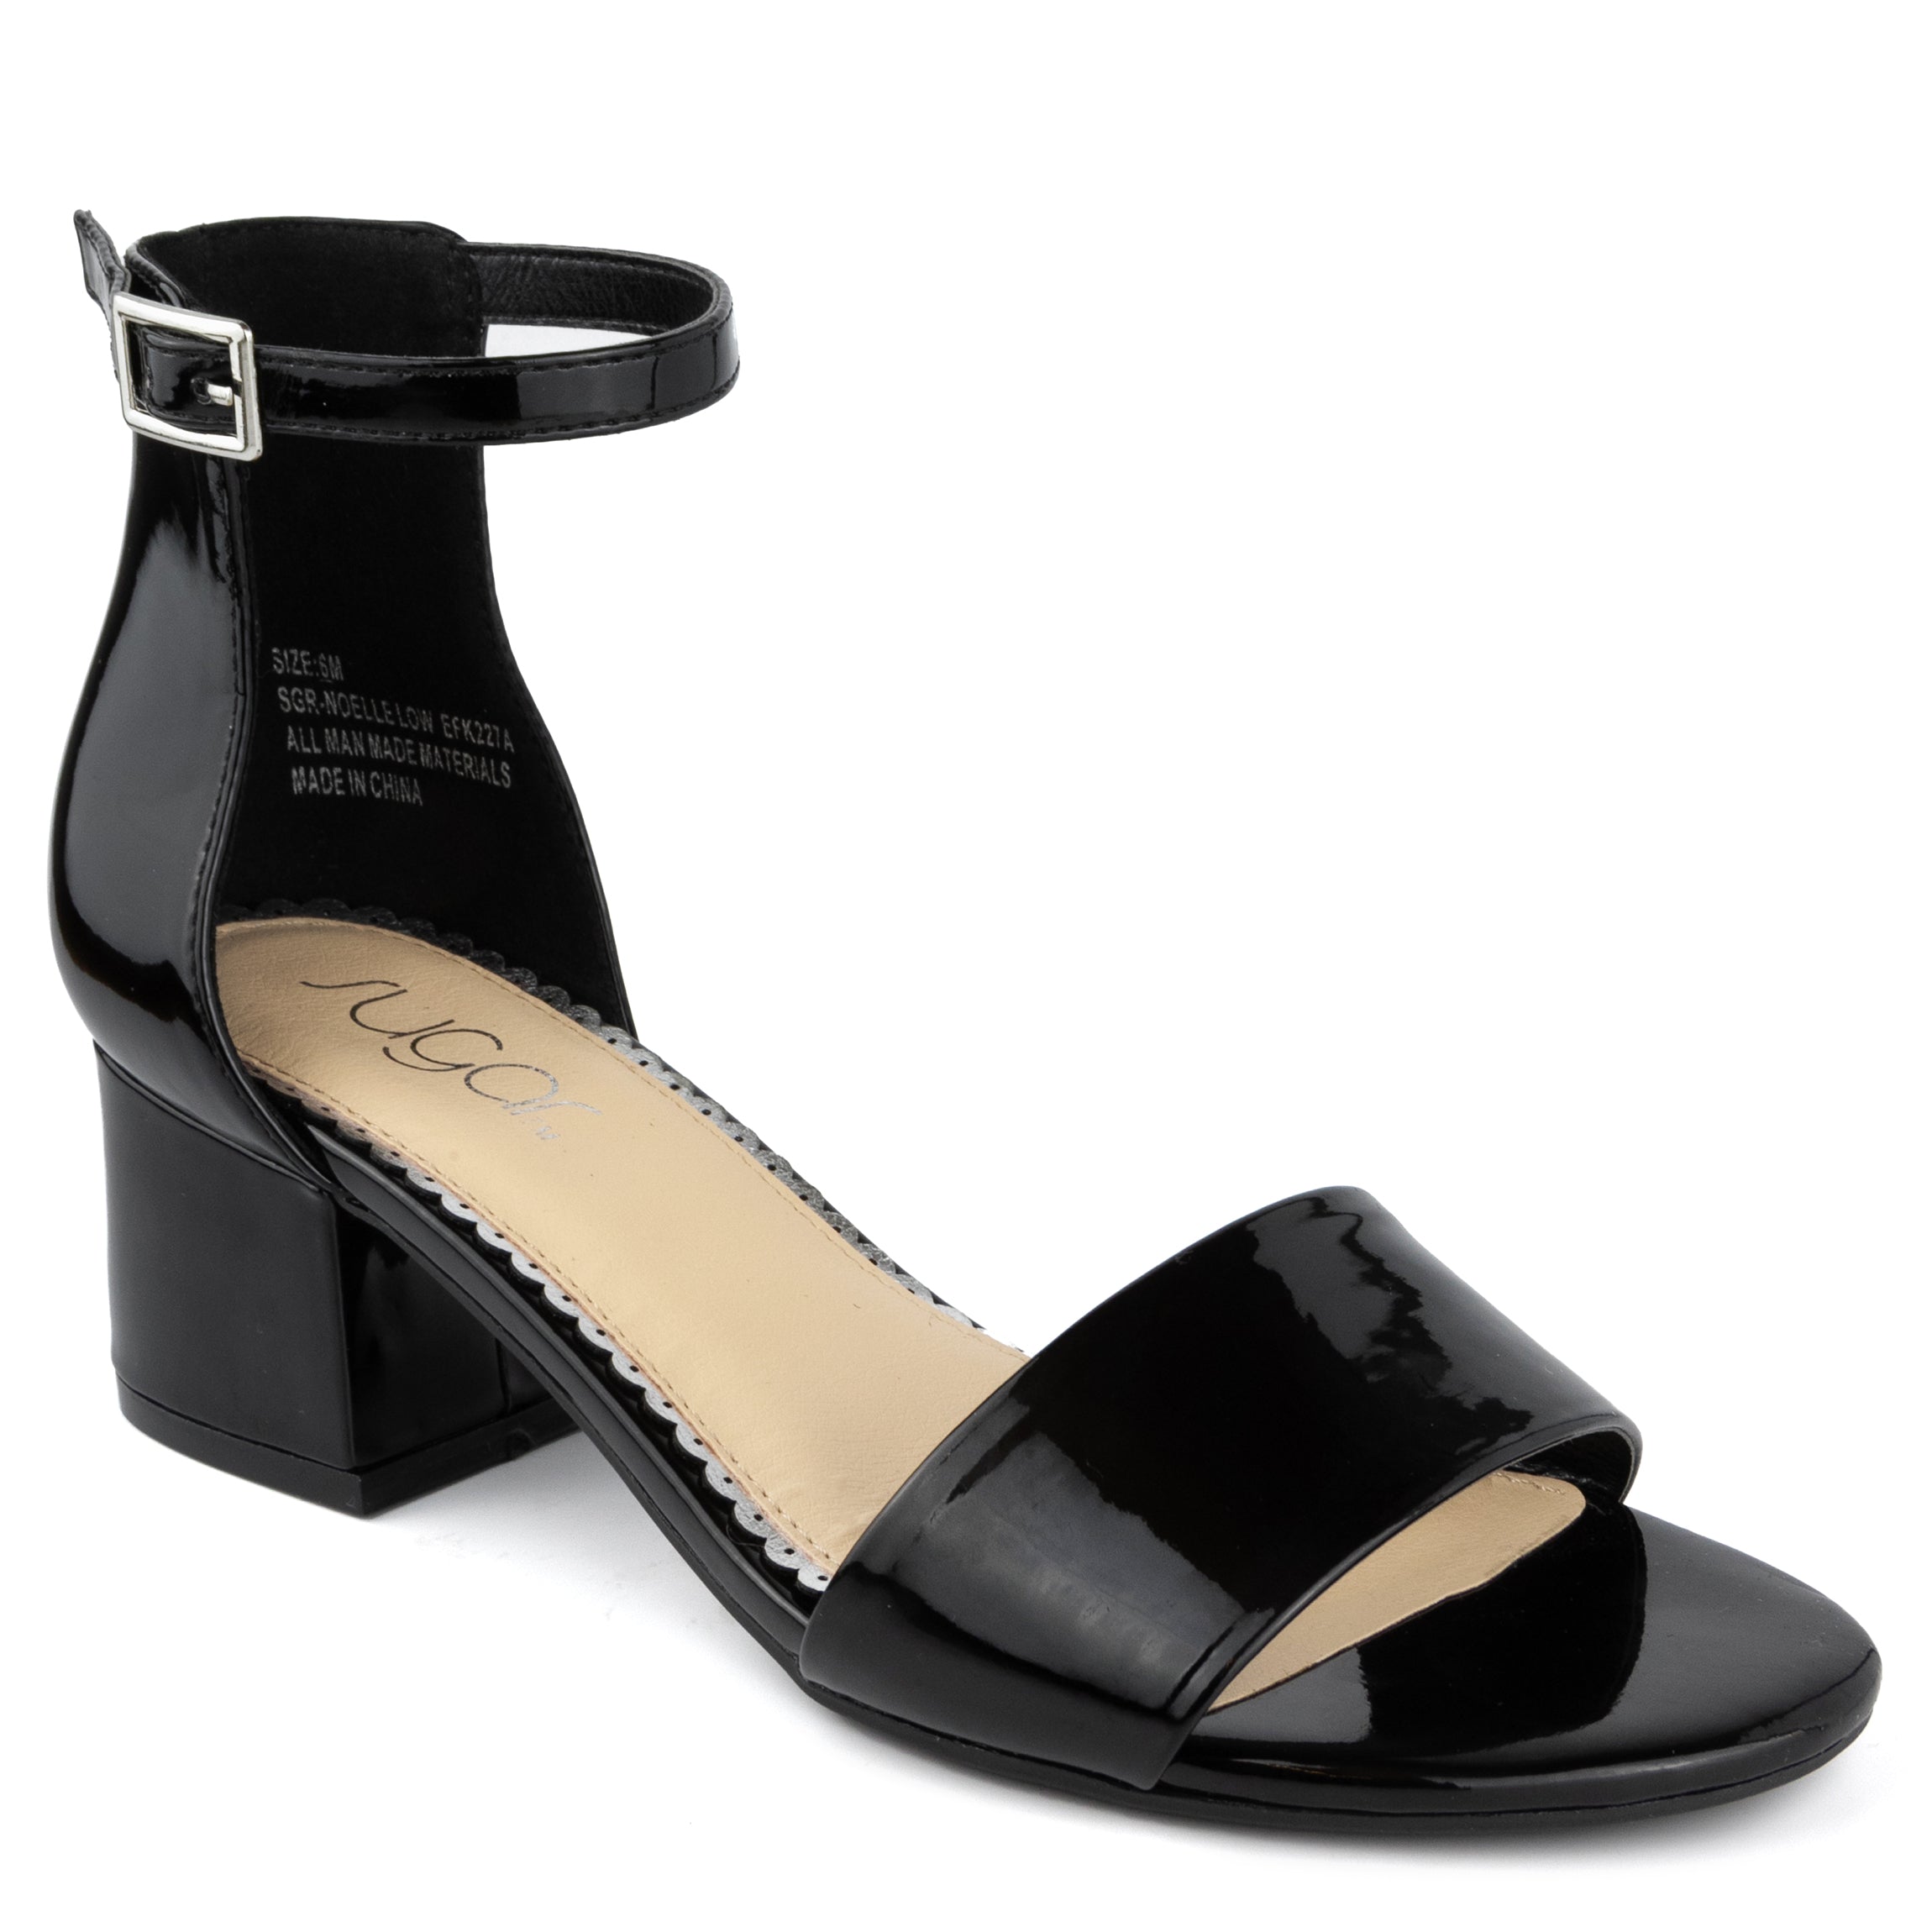 Naturalizer Melody Black Leather Dress Sandals | eBay